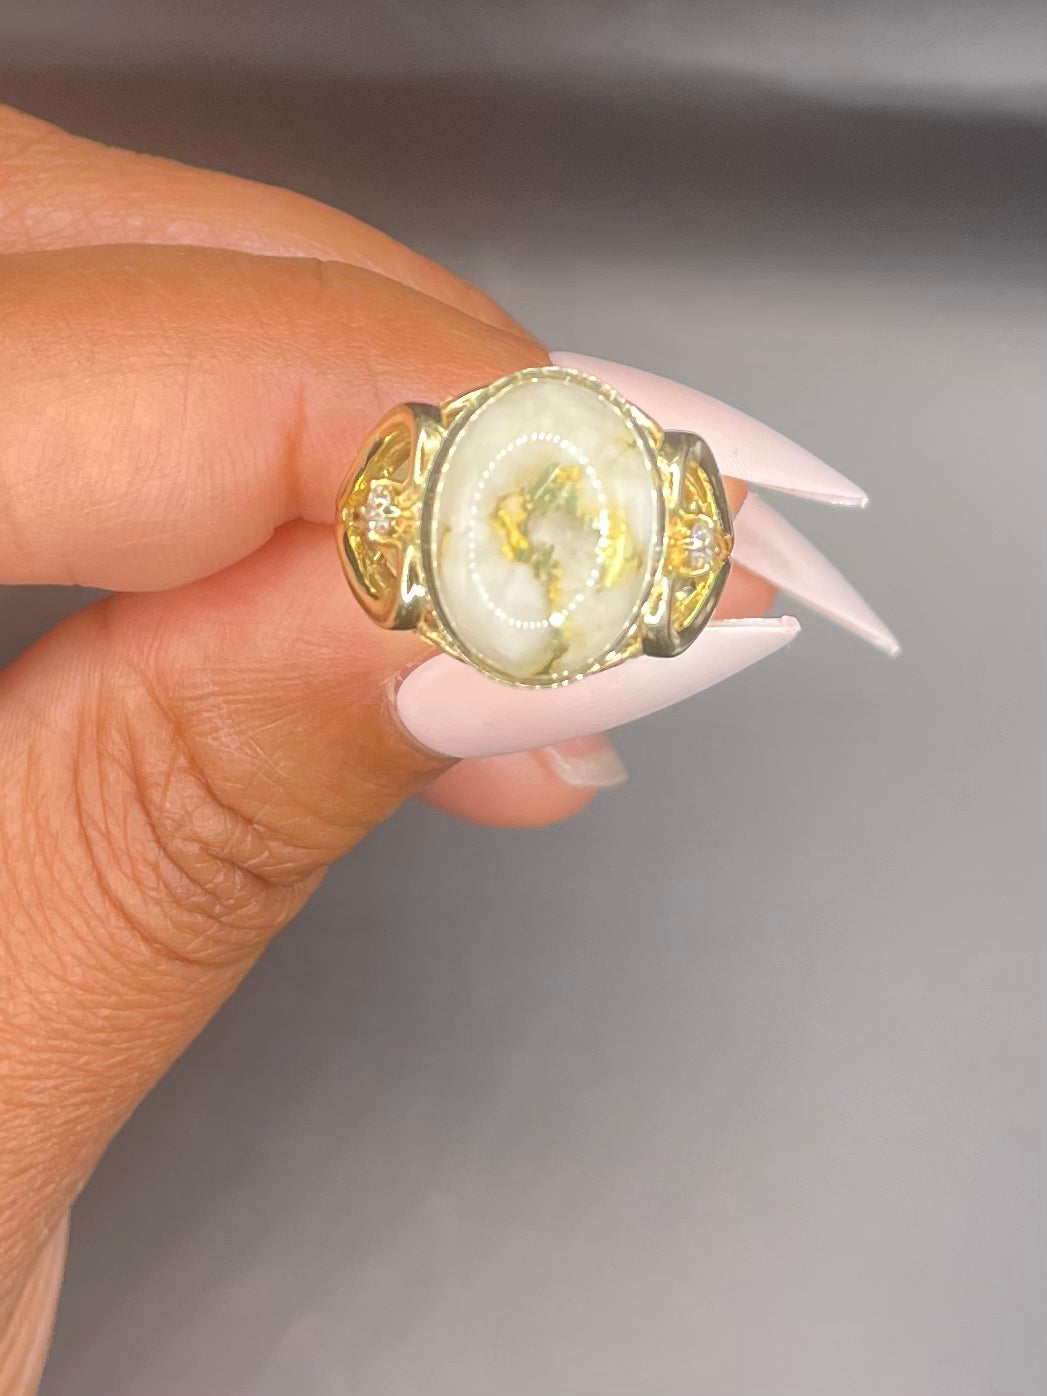 Limited edition, Gold quartz women’s ring